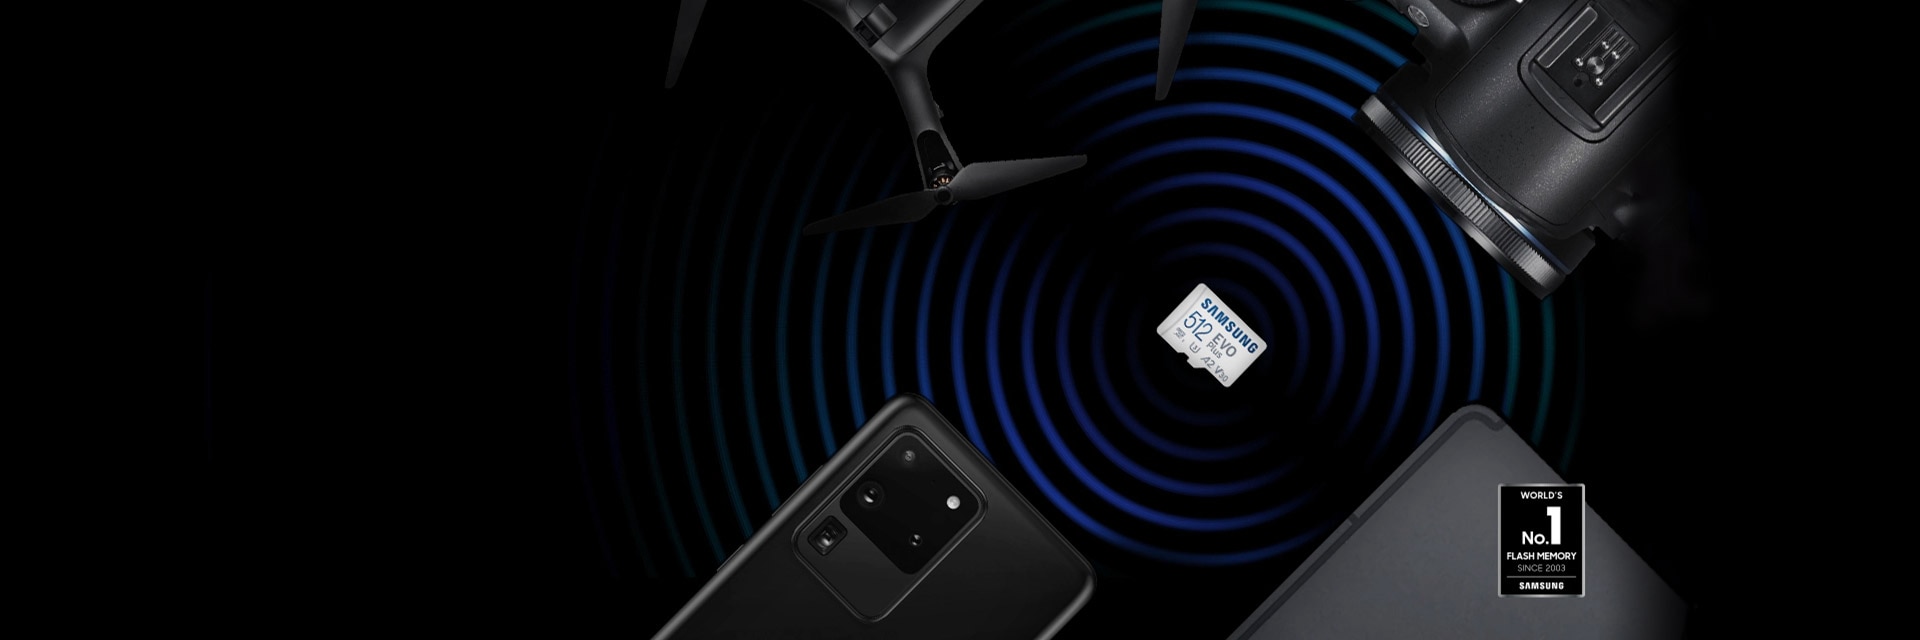 MicroSD EVO Plus (2021) | メモリーカード | 仕様と機能 | サムスン半導体日本